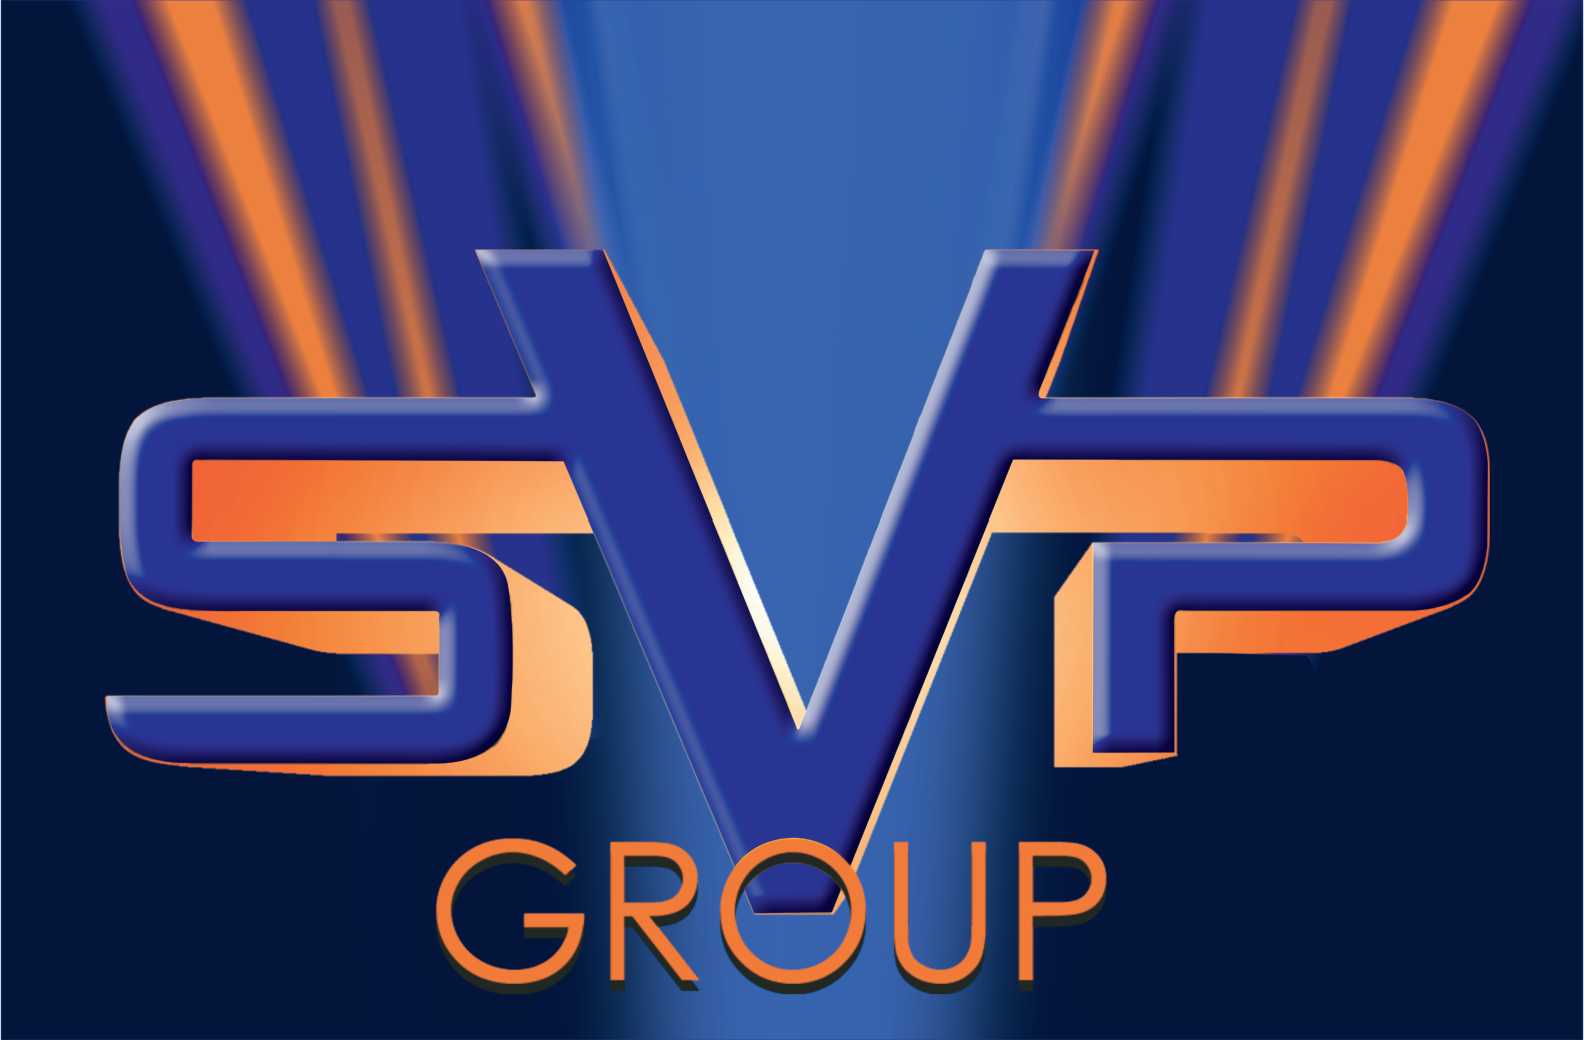 svp group Profile Picture